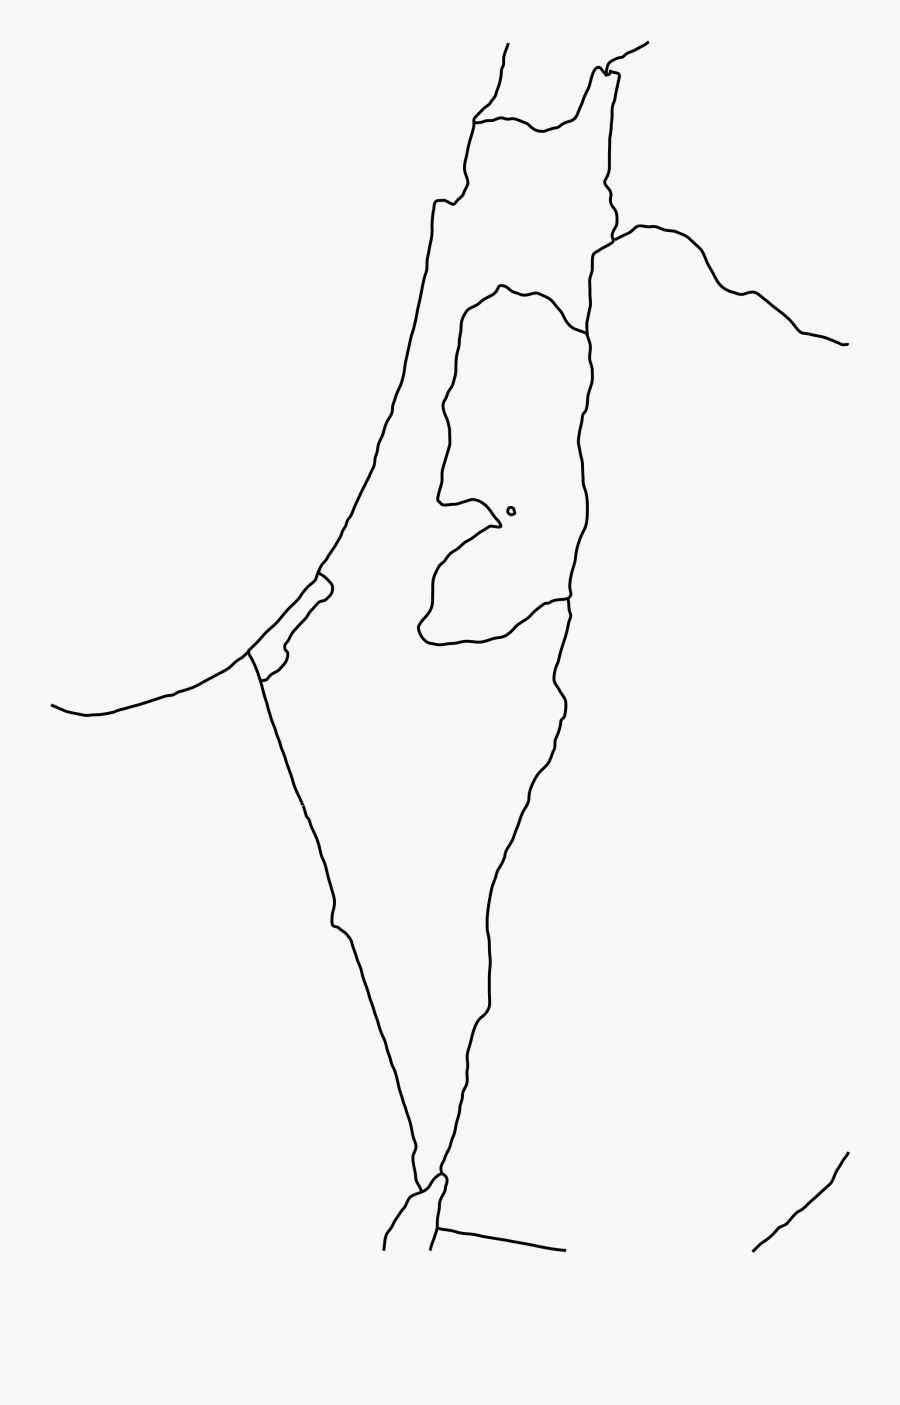 Clip Art Px Svg Hd Hq - Israel Palestine Blank Map, Transparent Clipart